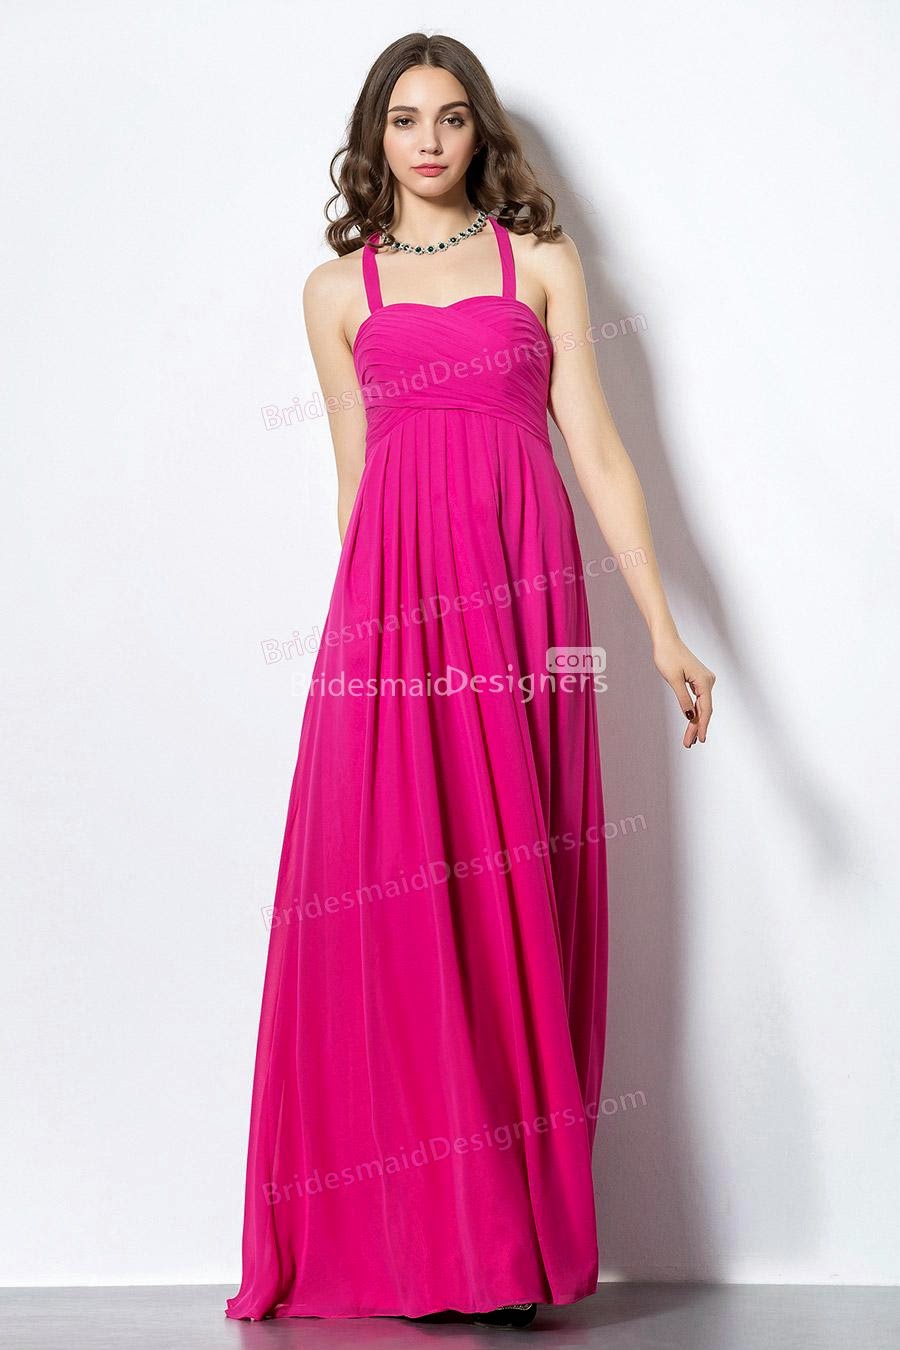 http://www.bridesmaiddesigners.com/trendy-halter-sweetheart-pleats-fuchsia-long-bridesmaid-dress-1122.html